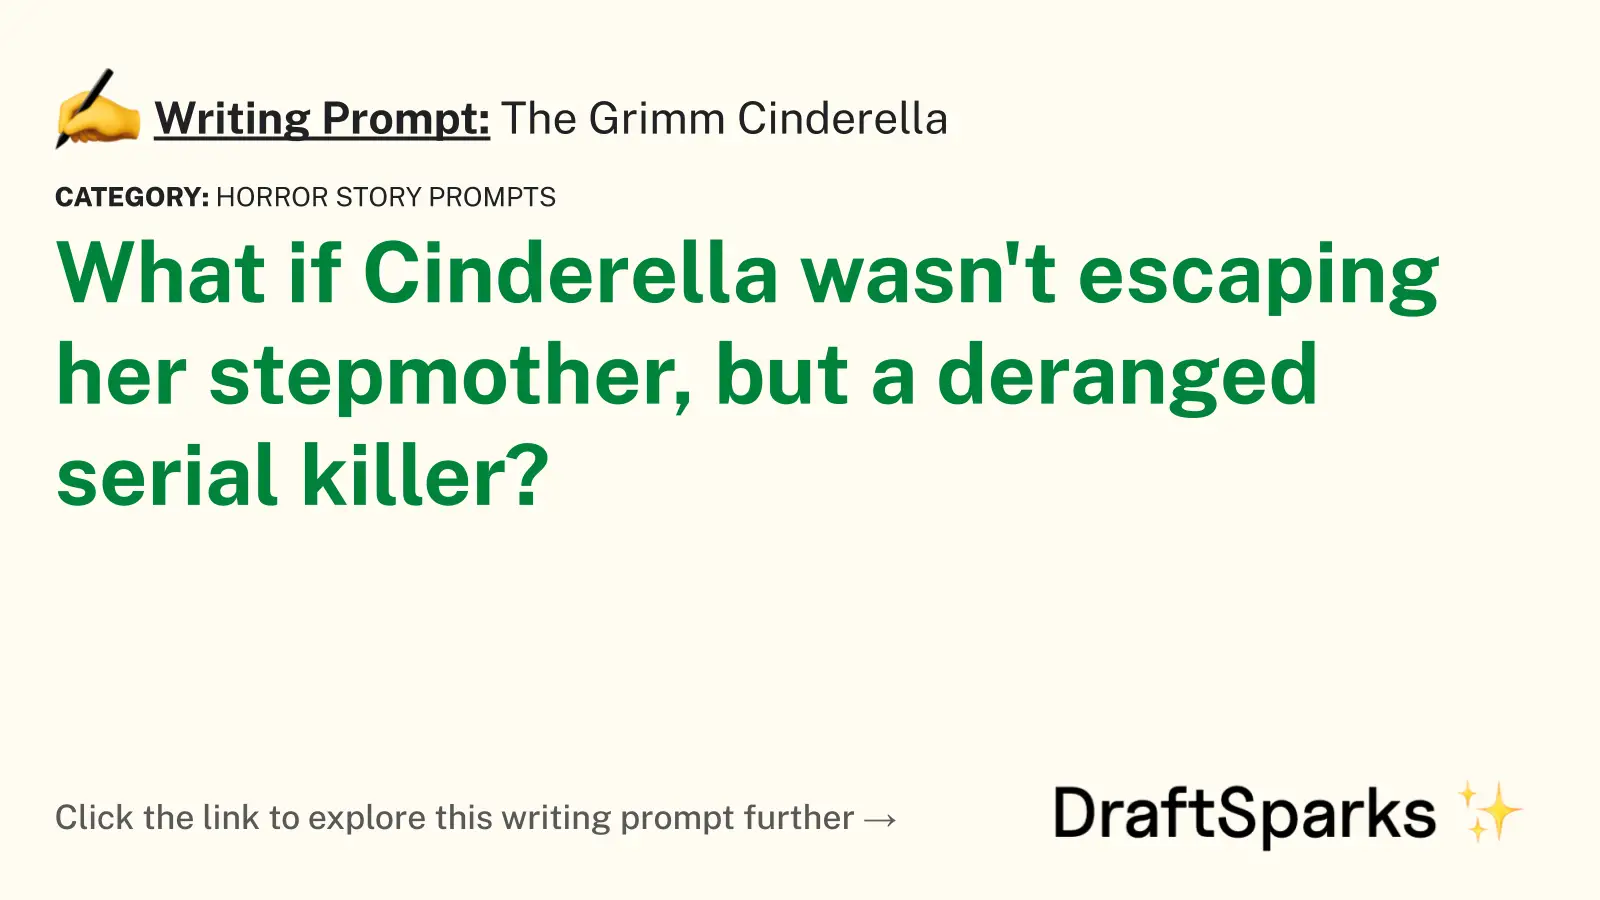 The Grimm Cinderella